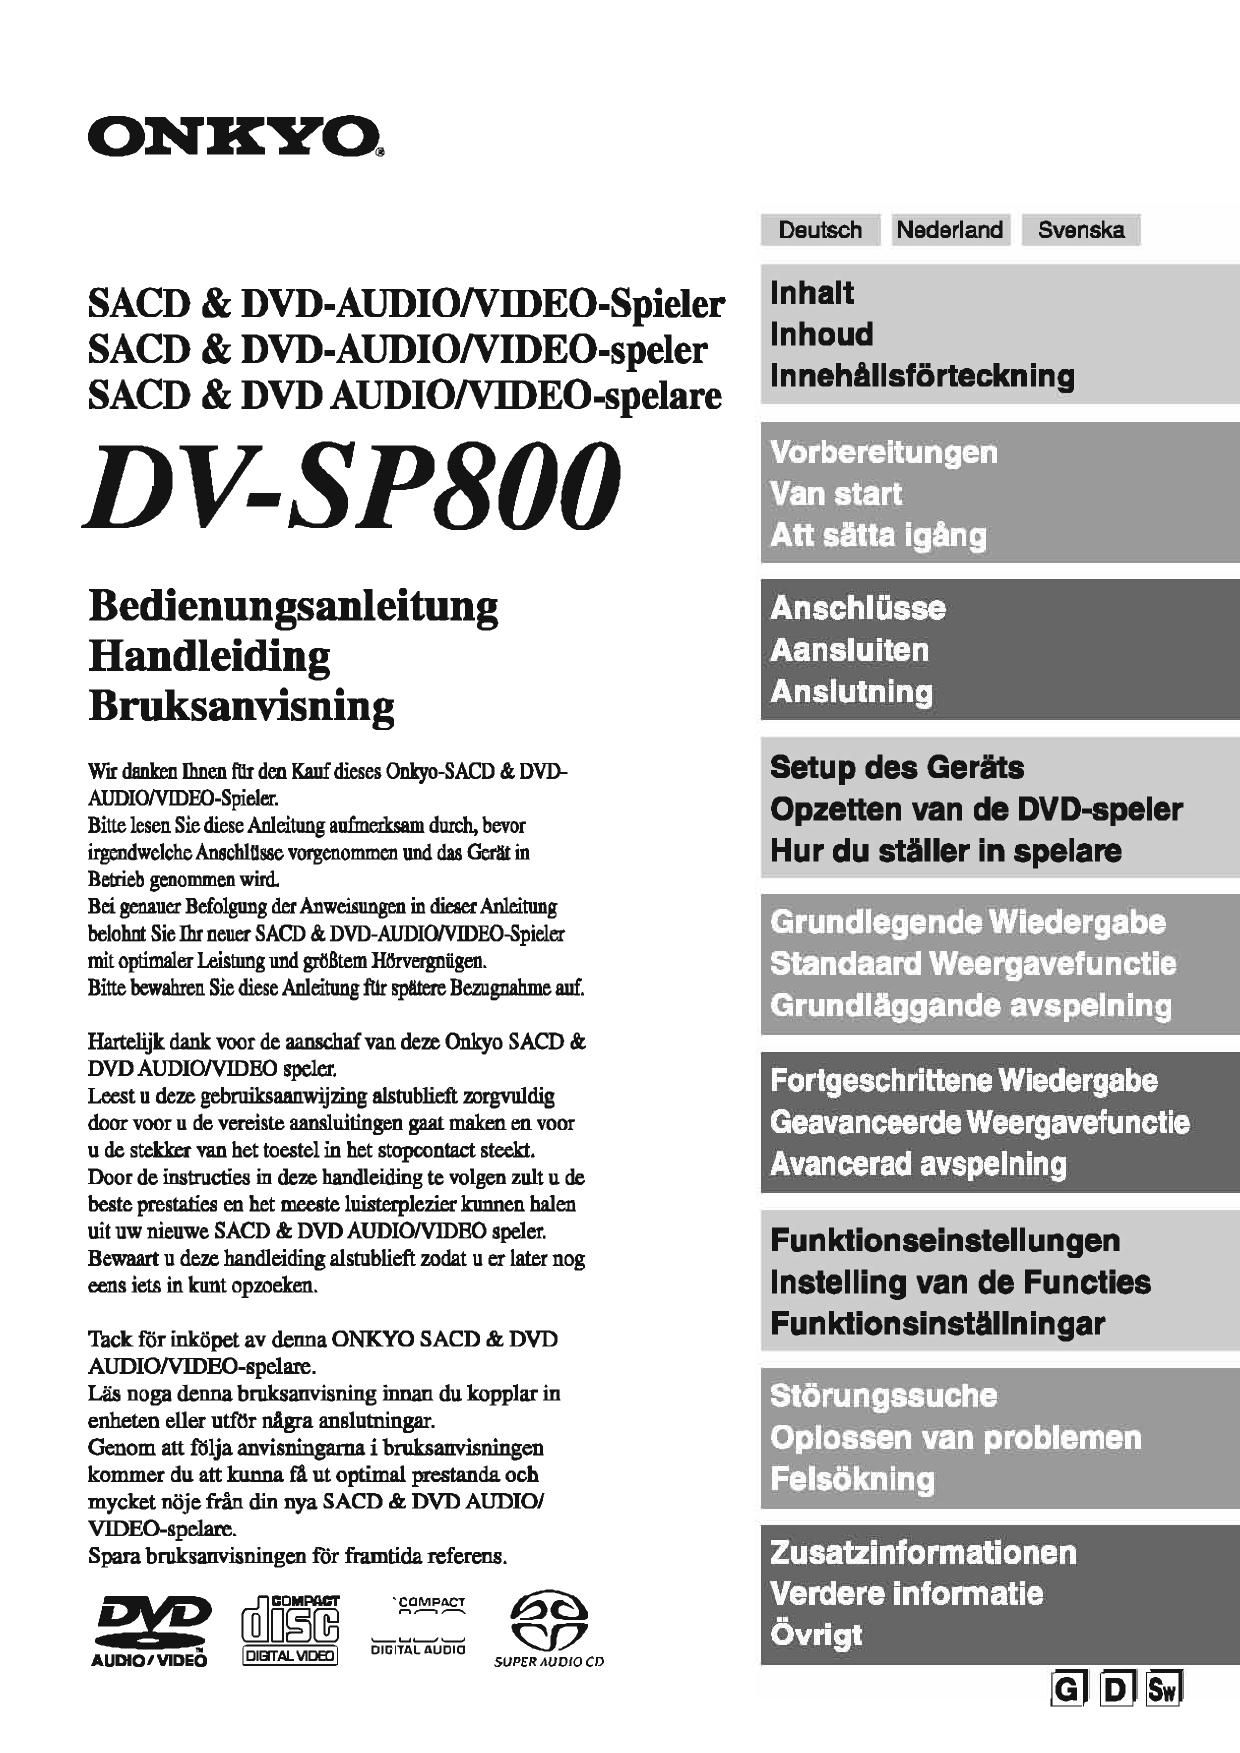 Onkyo DVSP 800 Owners Manual